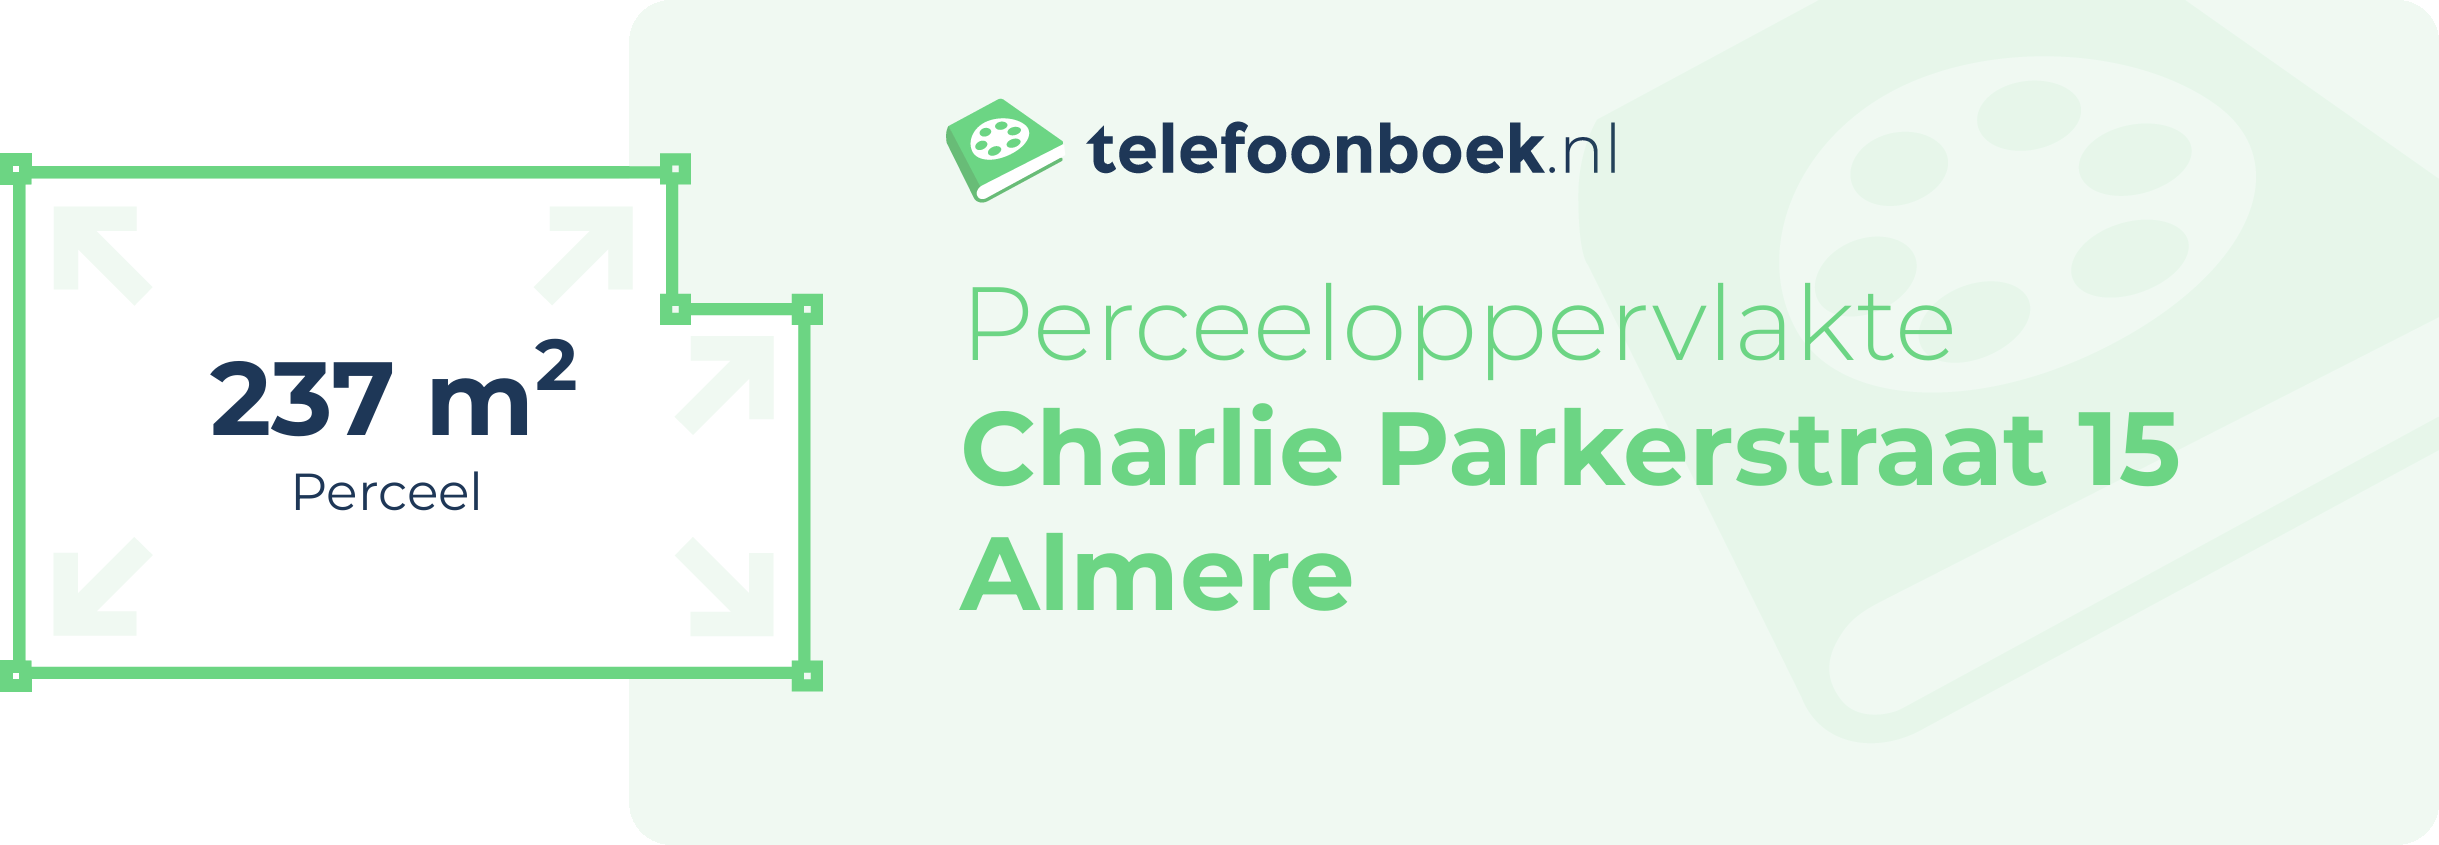 Perceeloppervlakte Charlie Parkerstraat 15 Almere